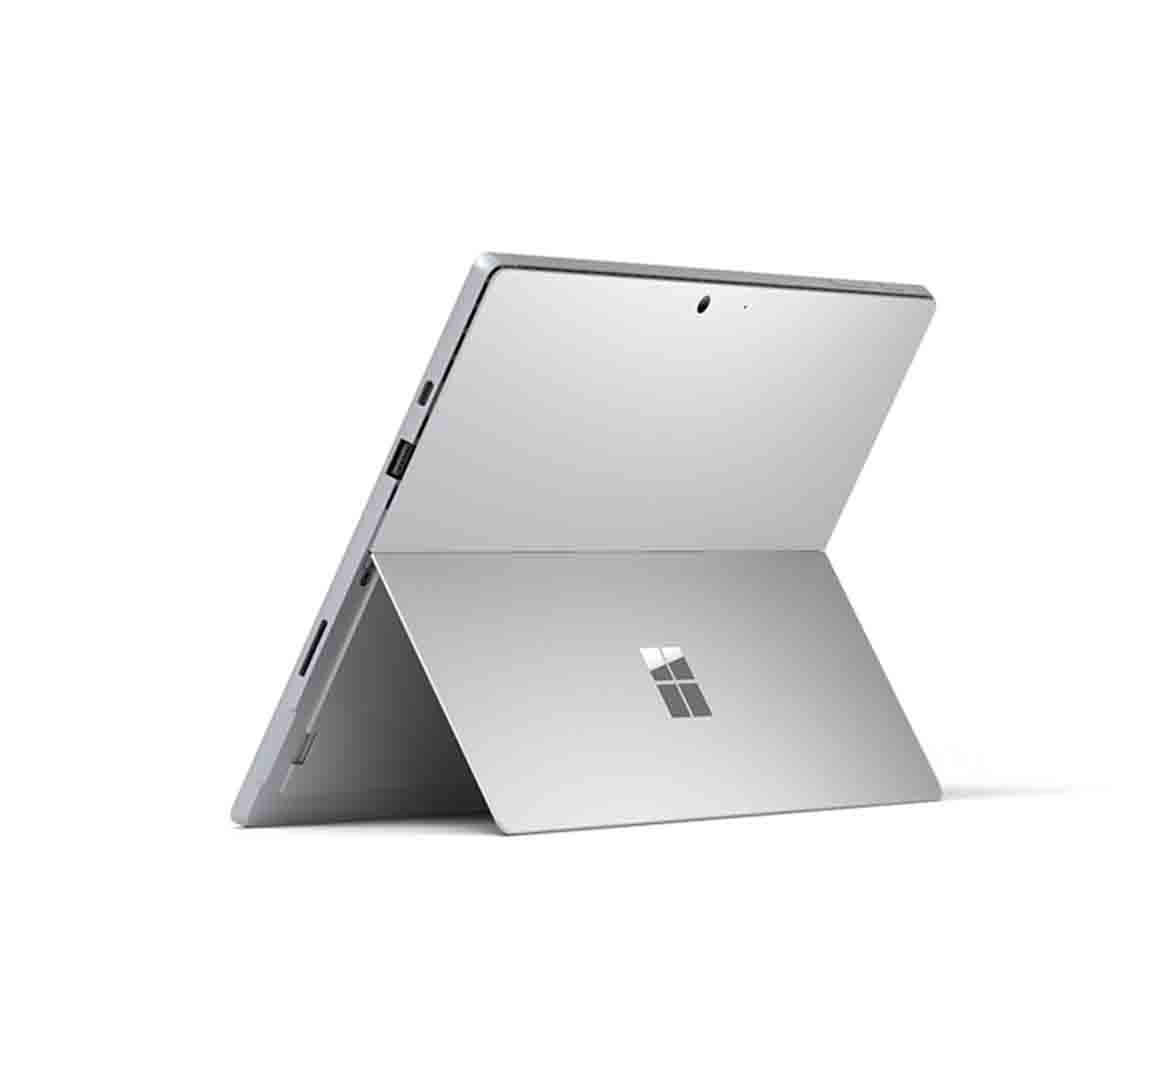 Microsoft Surface Pro 2 Business Laptop, Intel Core i5-4th Generation CPU, 4GB RAM, 128GB SSD, 10.1 inch Touchscreen, Win 10, Refurbished Laptop